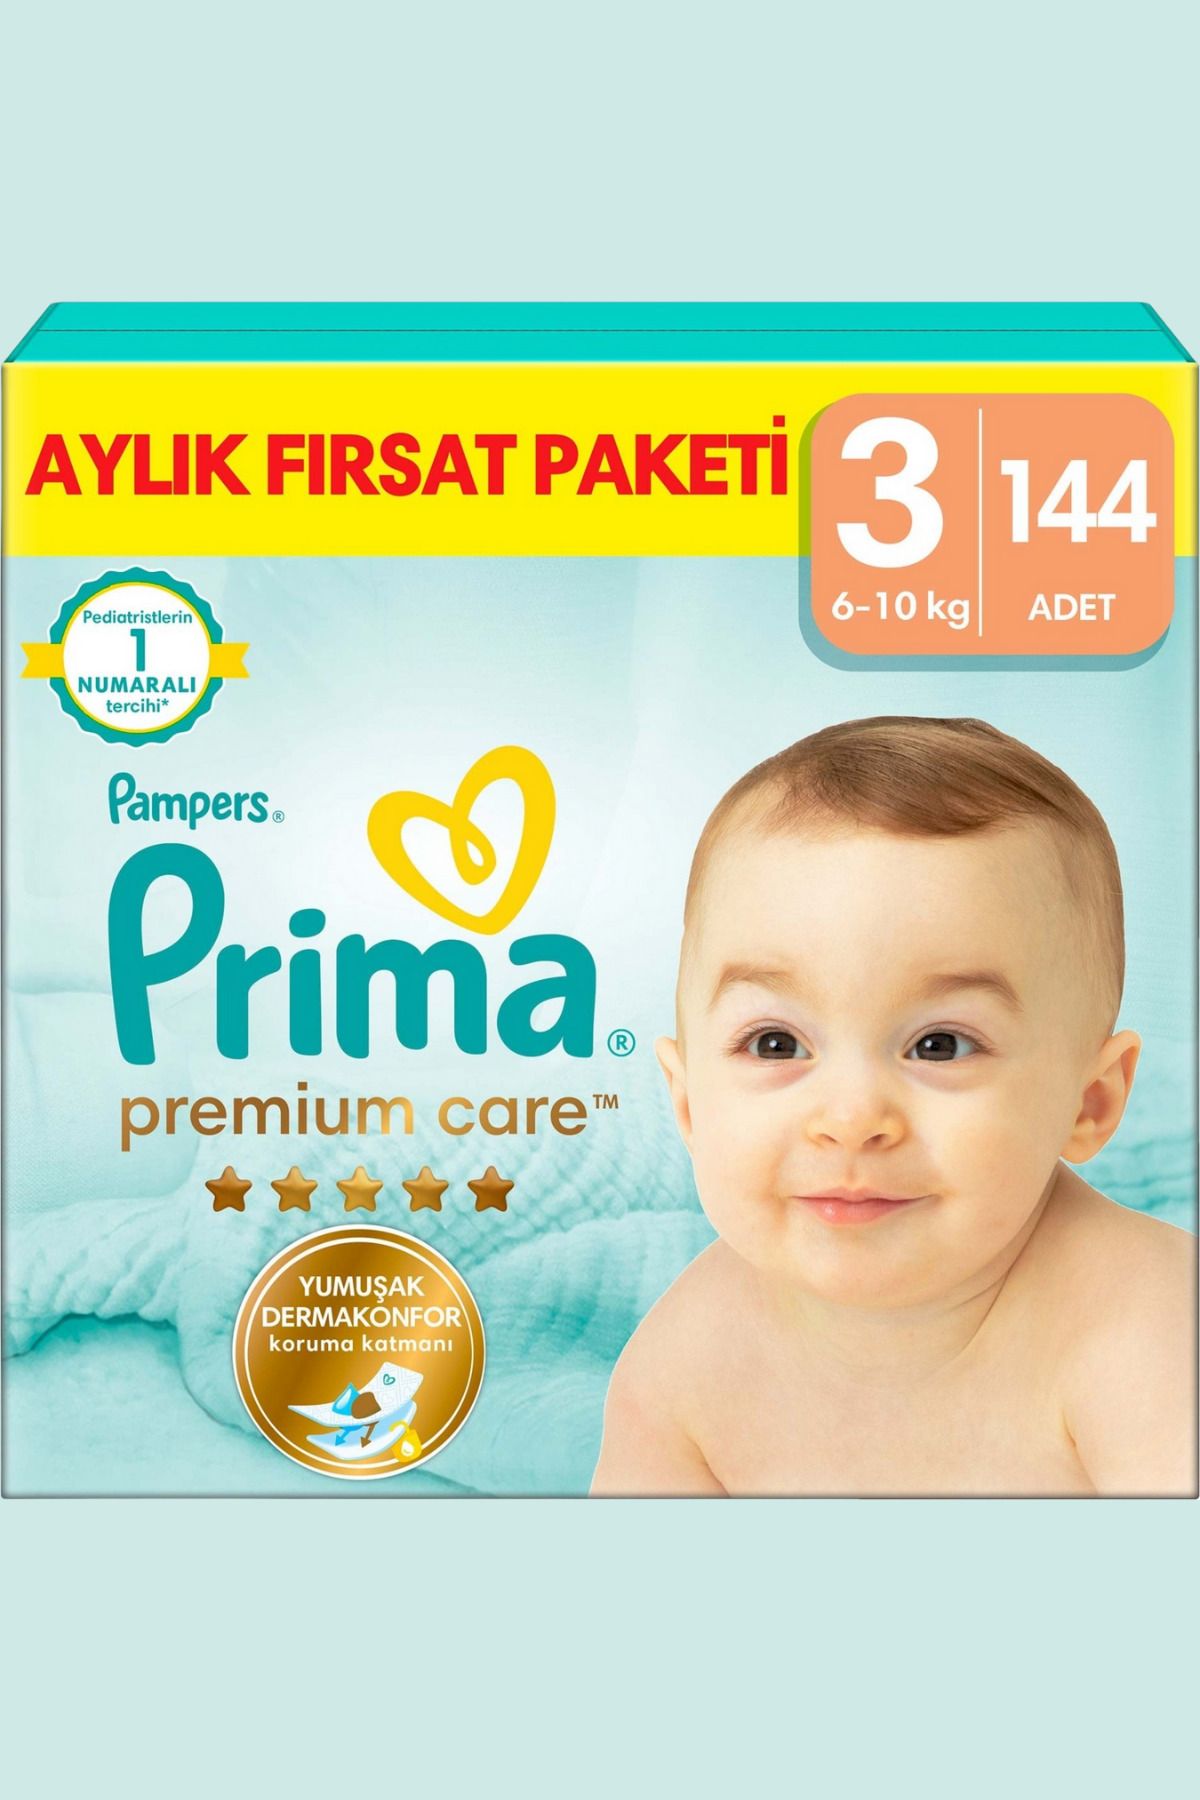 Prima Premium Care Bebek Bezi 3 Numara 144 Adet 6-10 kg Aylık Fırsat Paketi